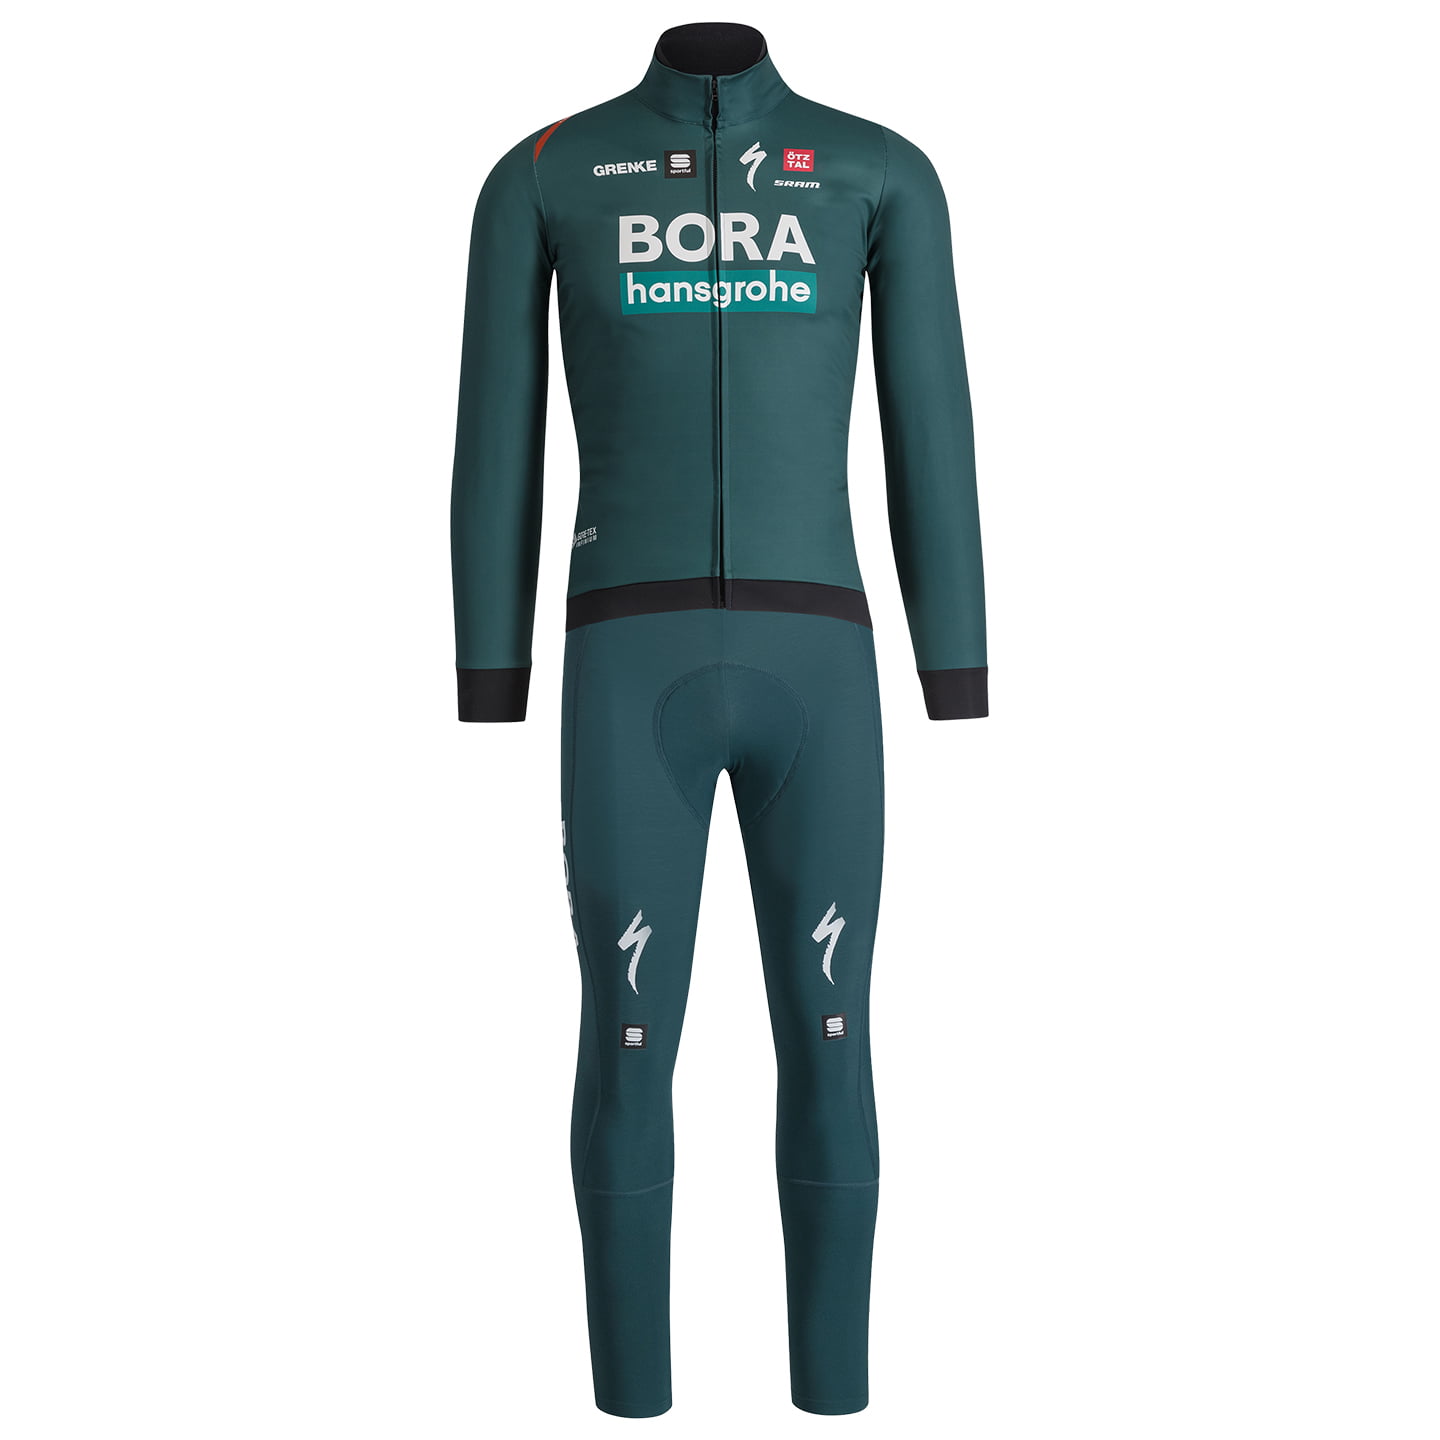 BORA-hansgrohe Fiandre 2024 Set (winter jacket + cycling tights) Set (2 pieces), for men